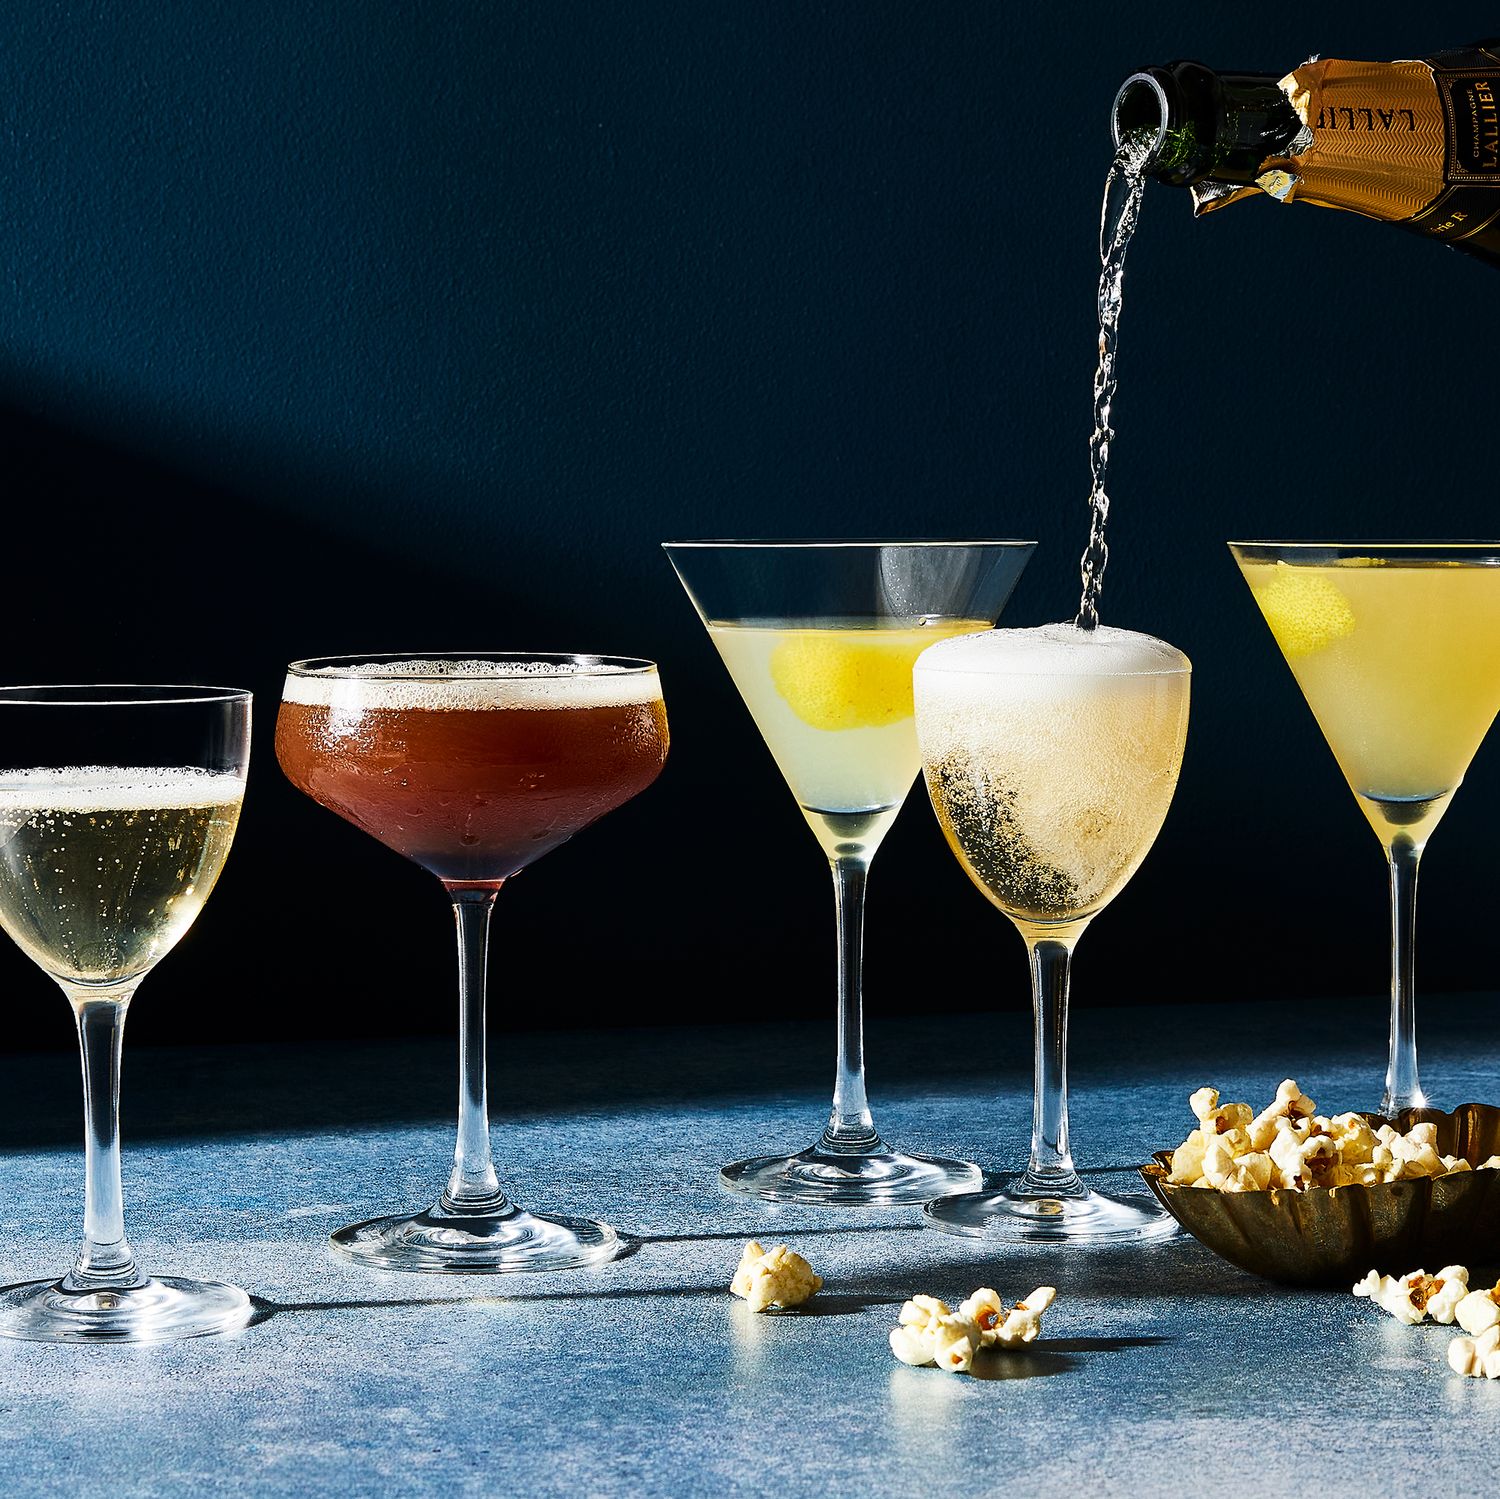 Schott Zwiesel Complete Bar Classic Cocktail Glasses 12-Piece Set